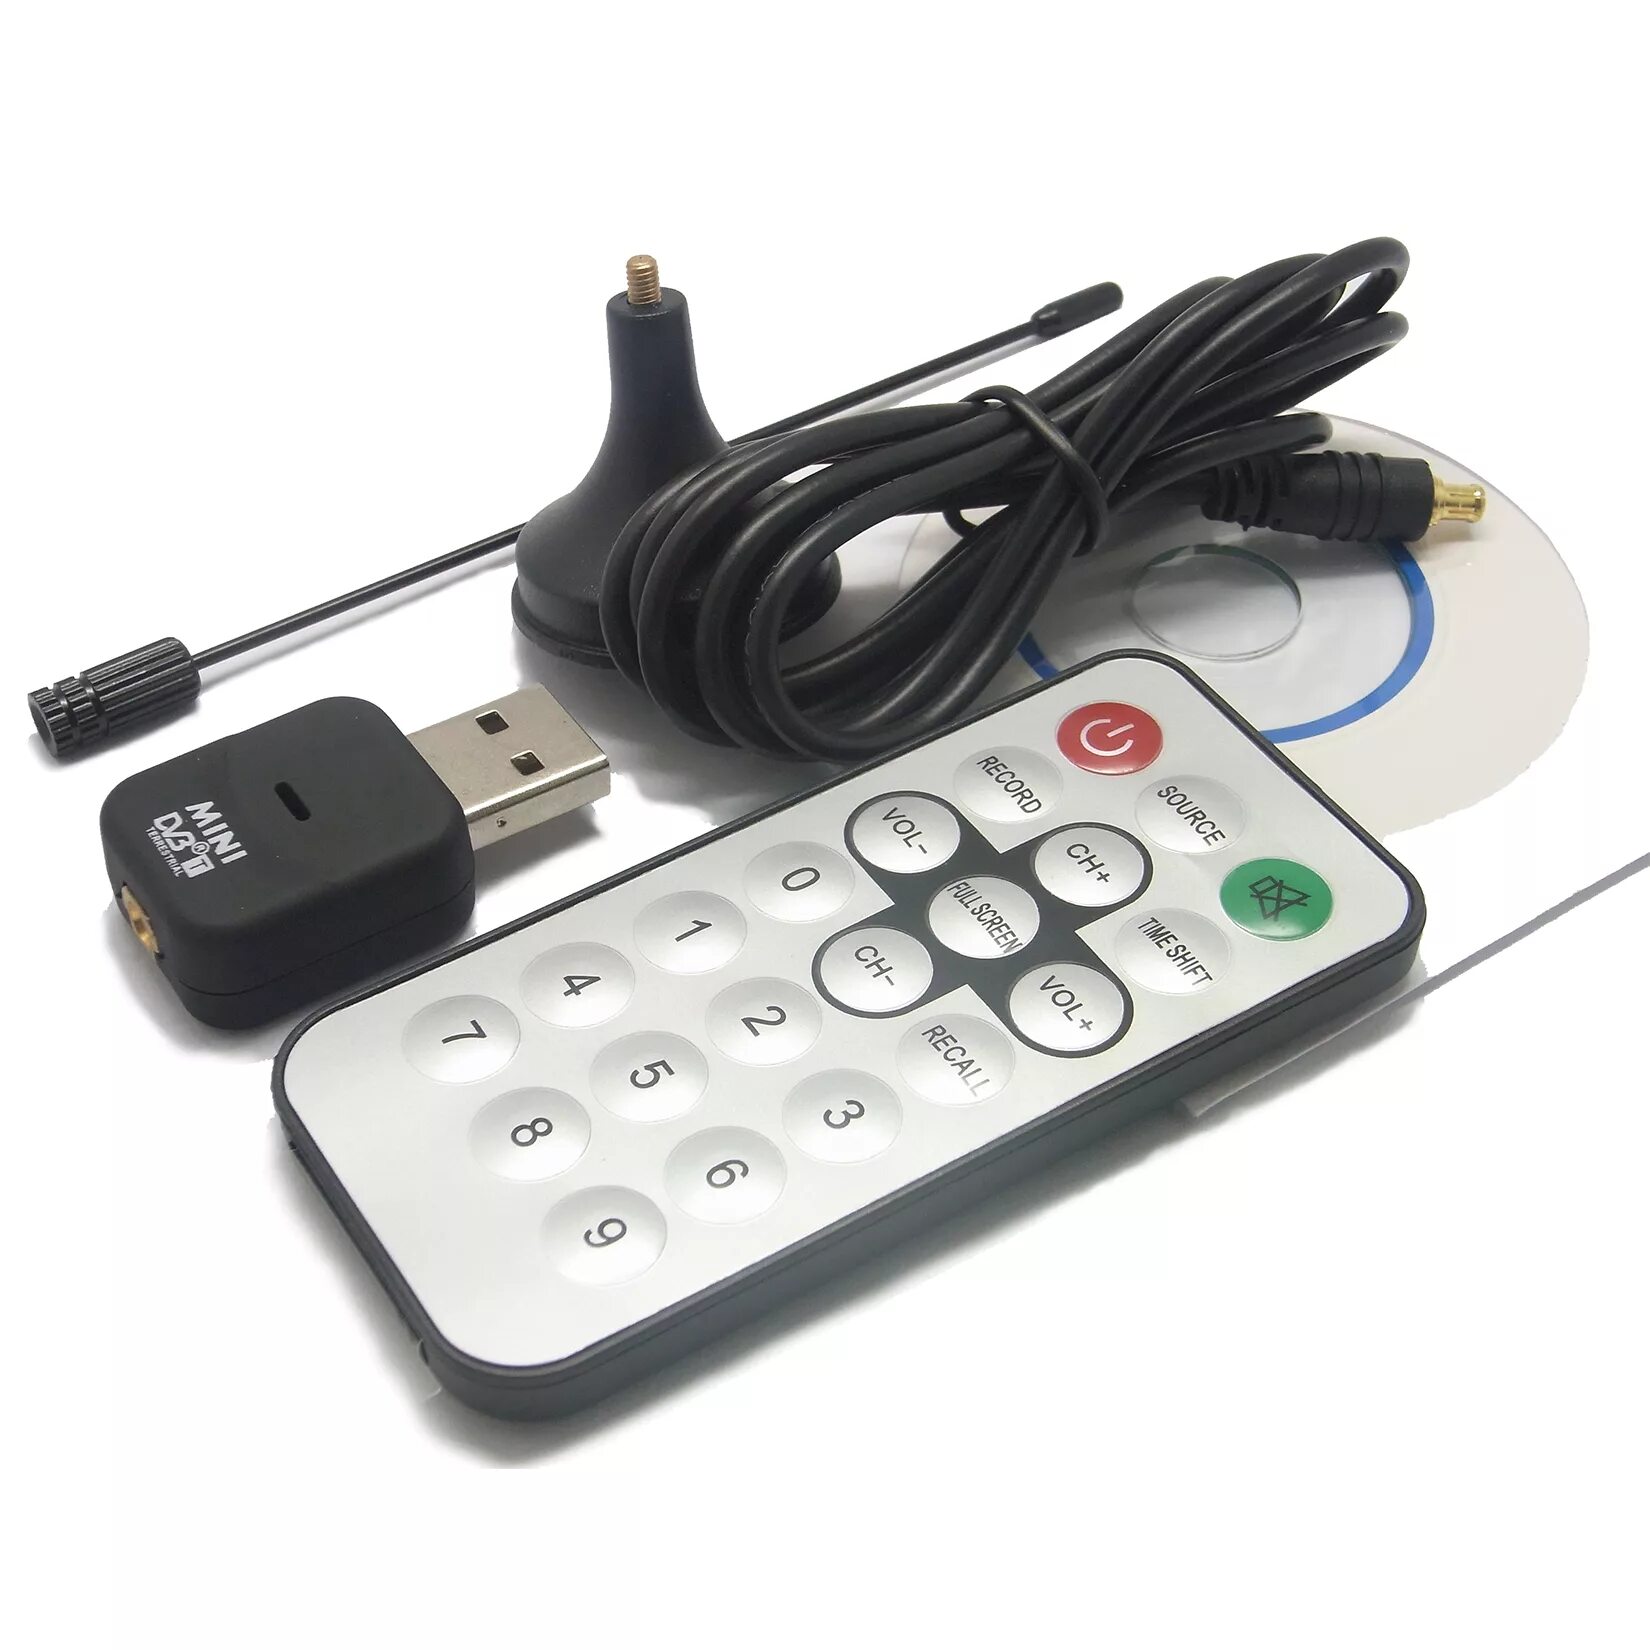 TV-тюнер Lit 1430. TV-тюнер x3m apc100. USB TV тюнер DVB-t2. TV-тюнер Cabletech urz0186. Tv hunter hybrid